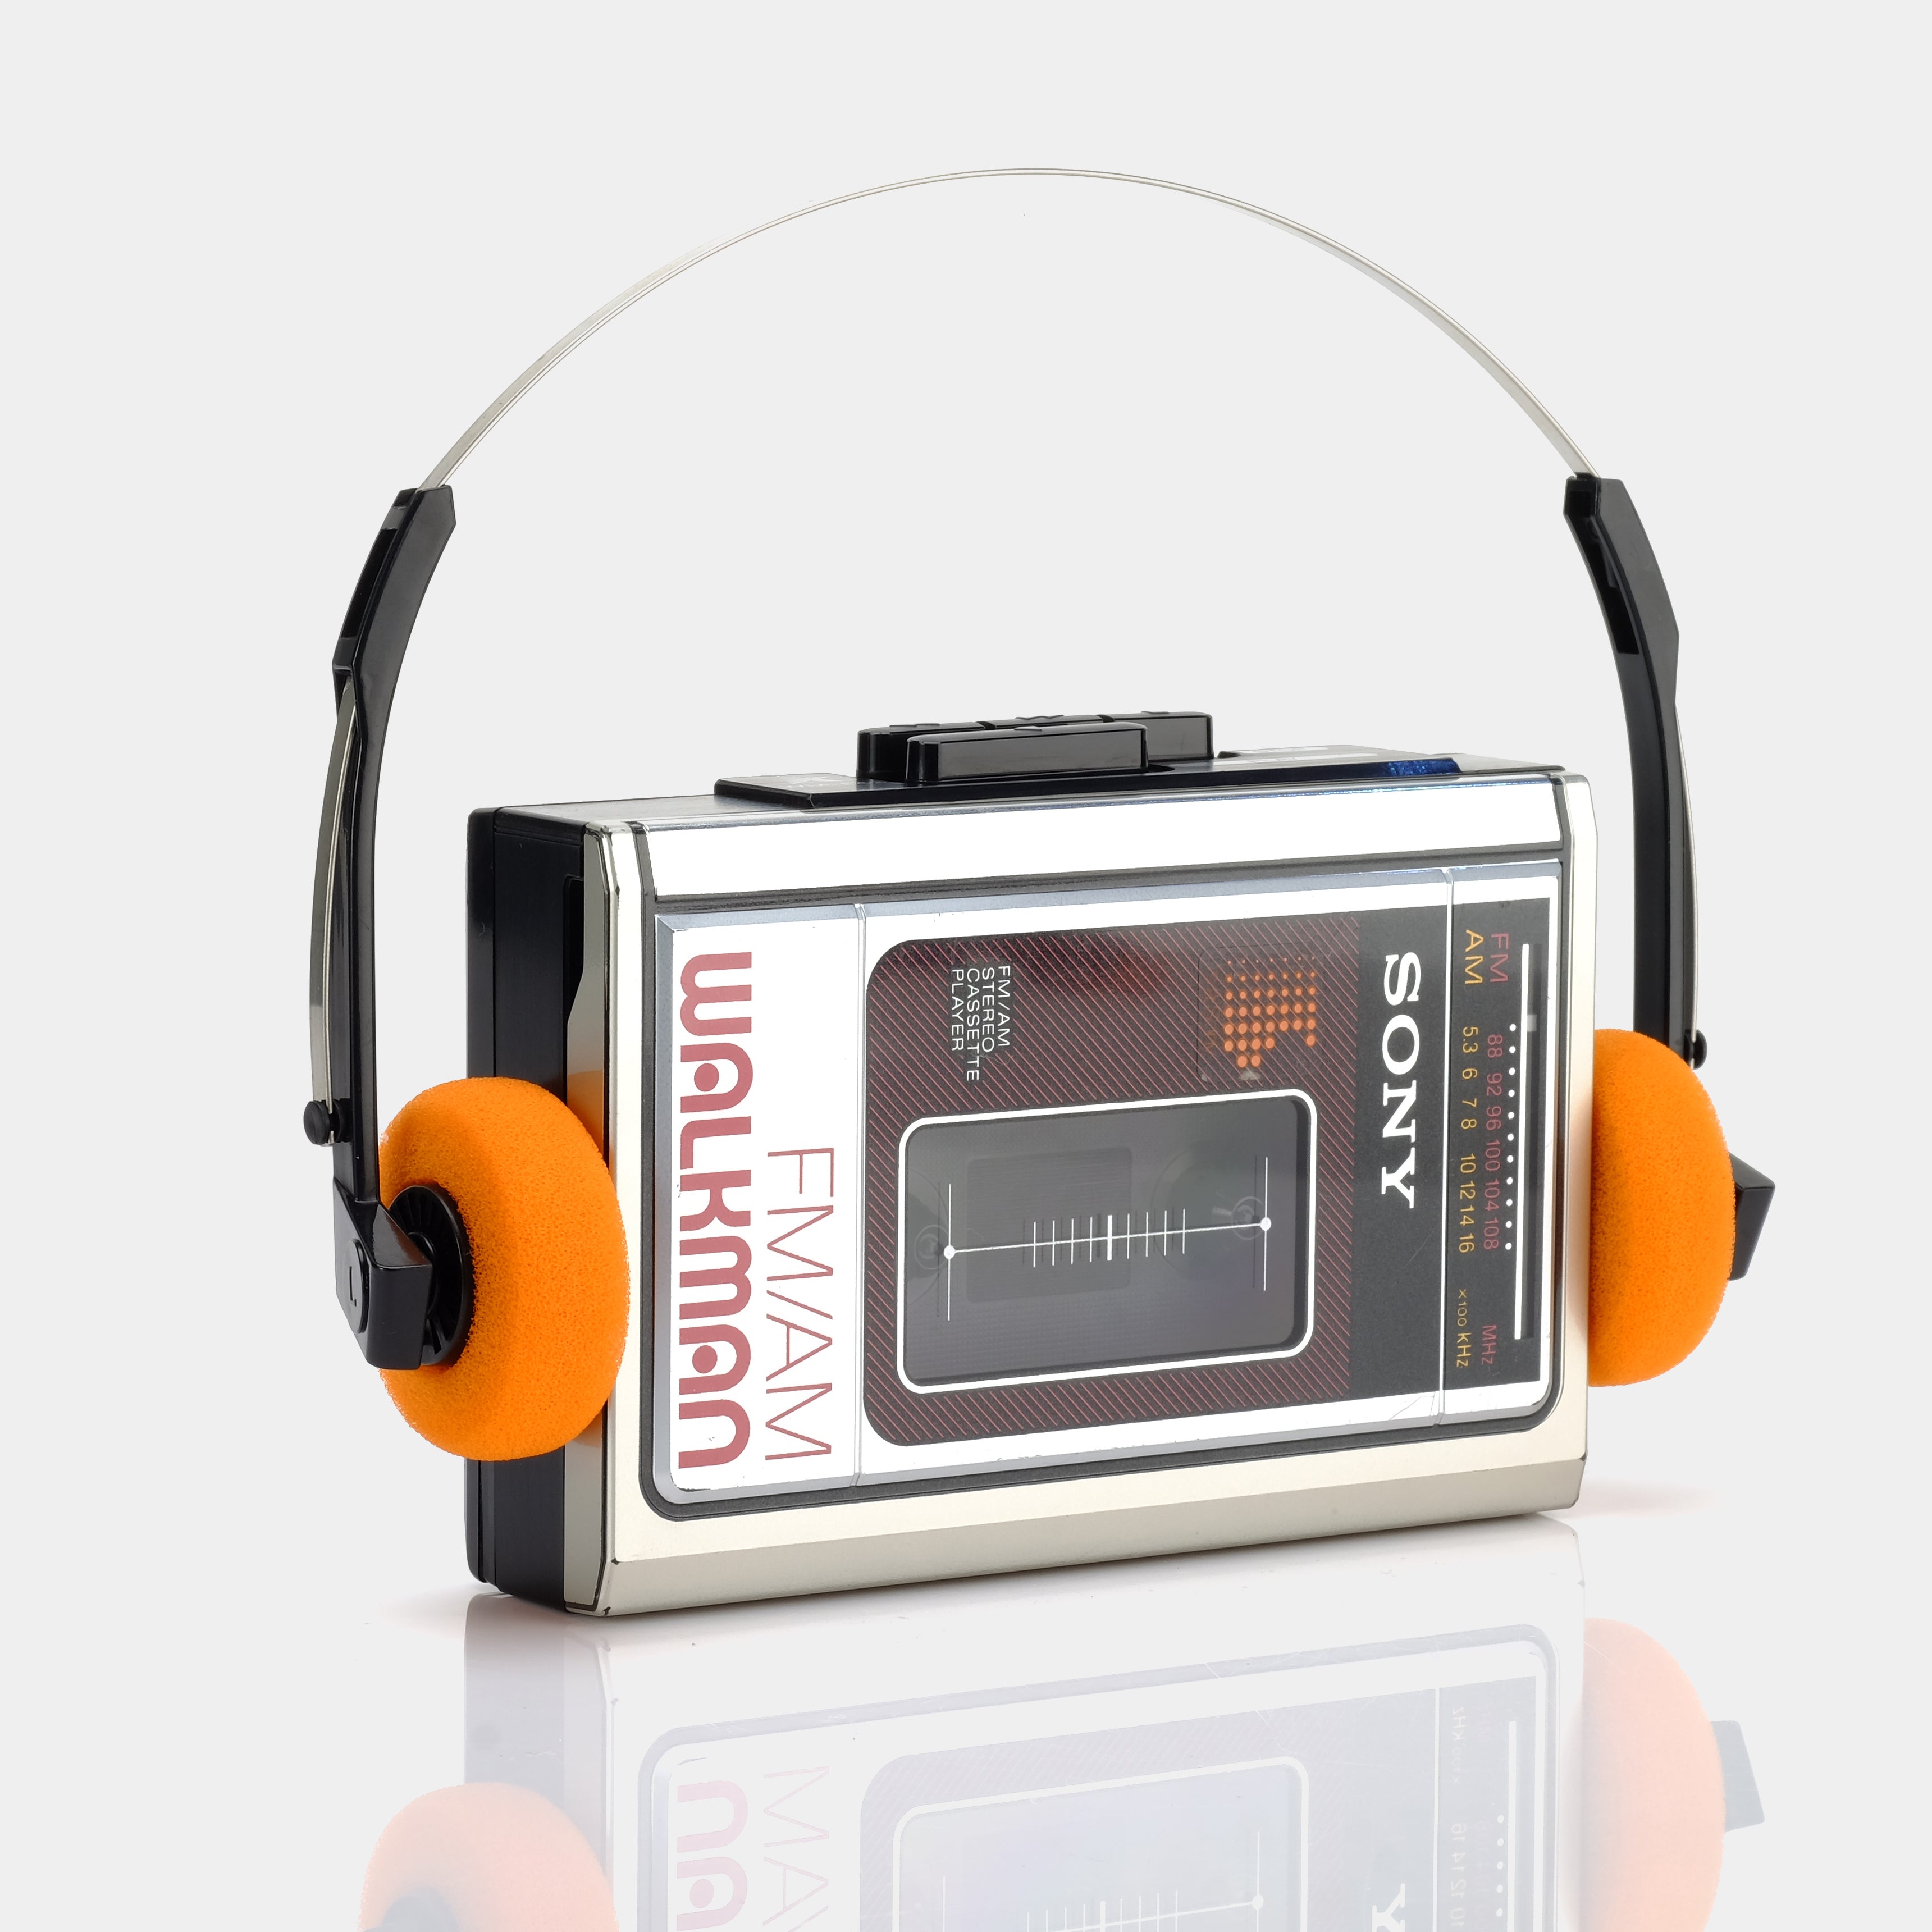 Sony Walkman WM-F42 Portable Cassette Player